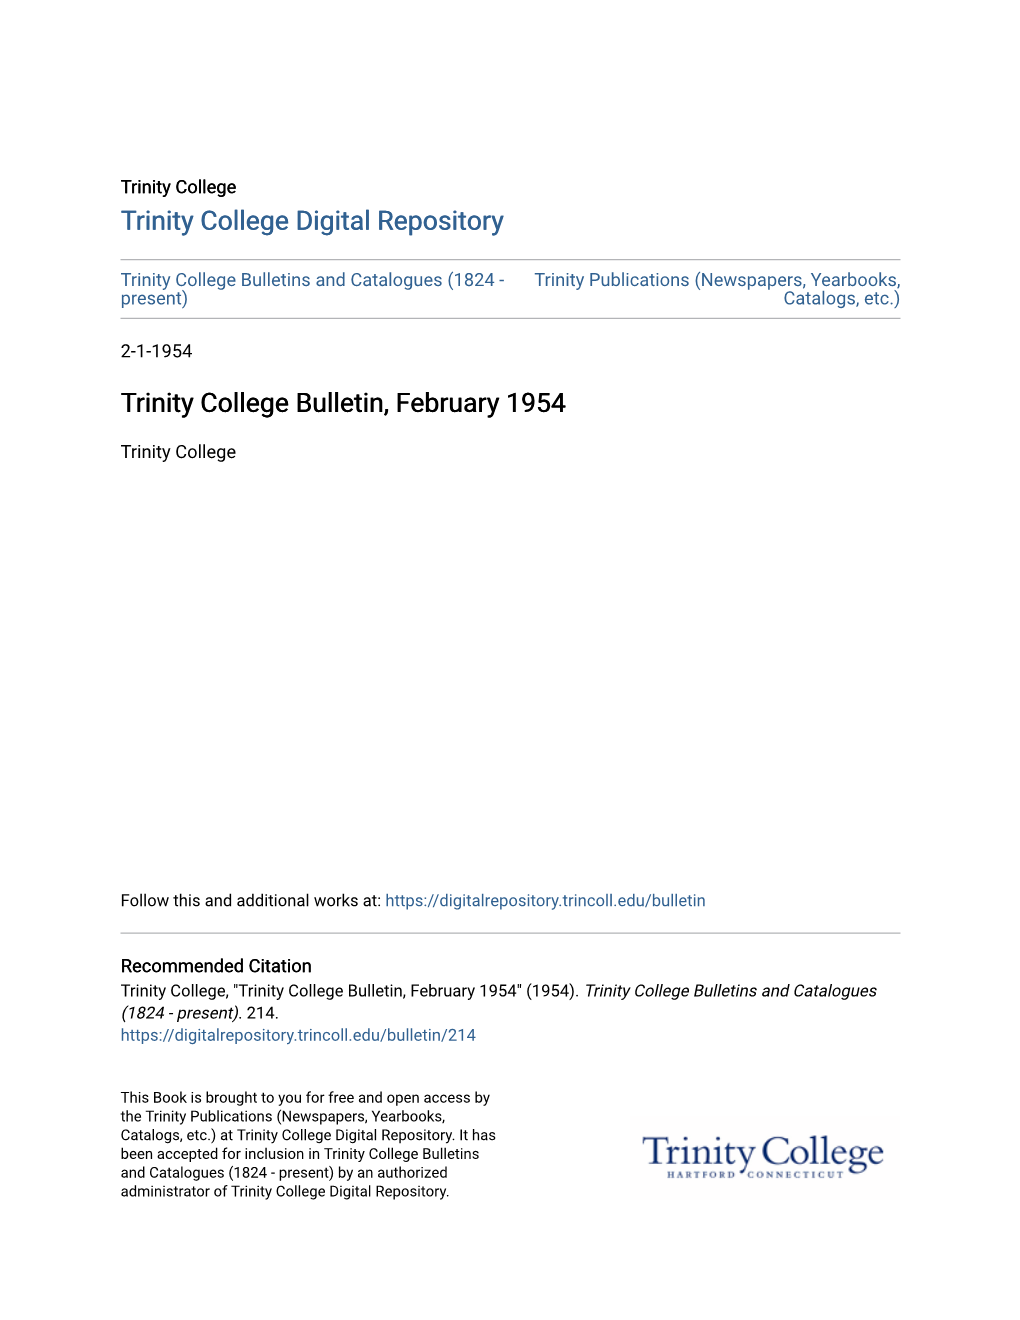 Trinity College Bulletin, February 1954